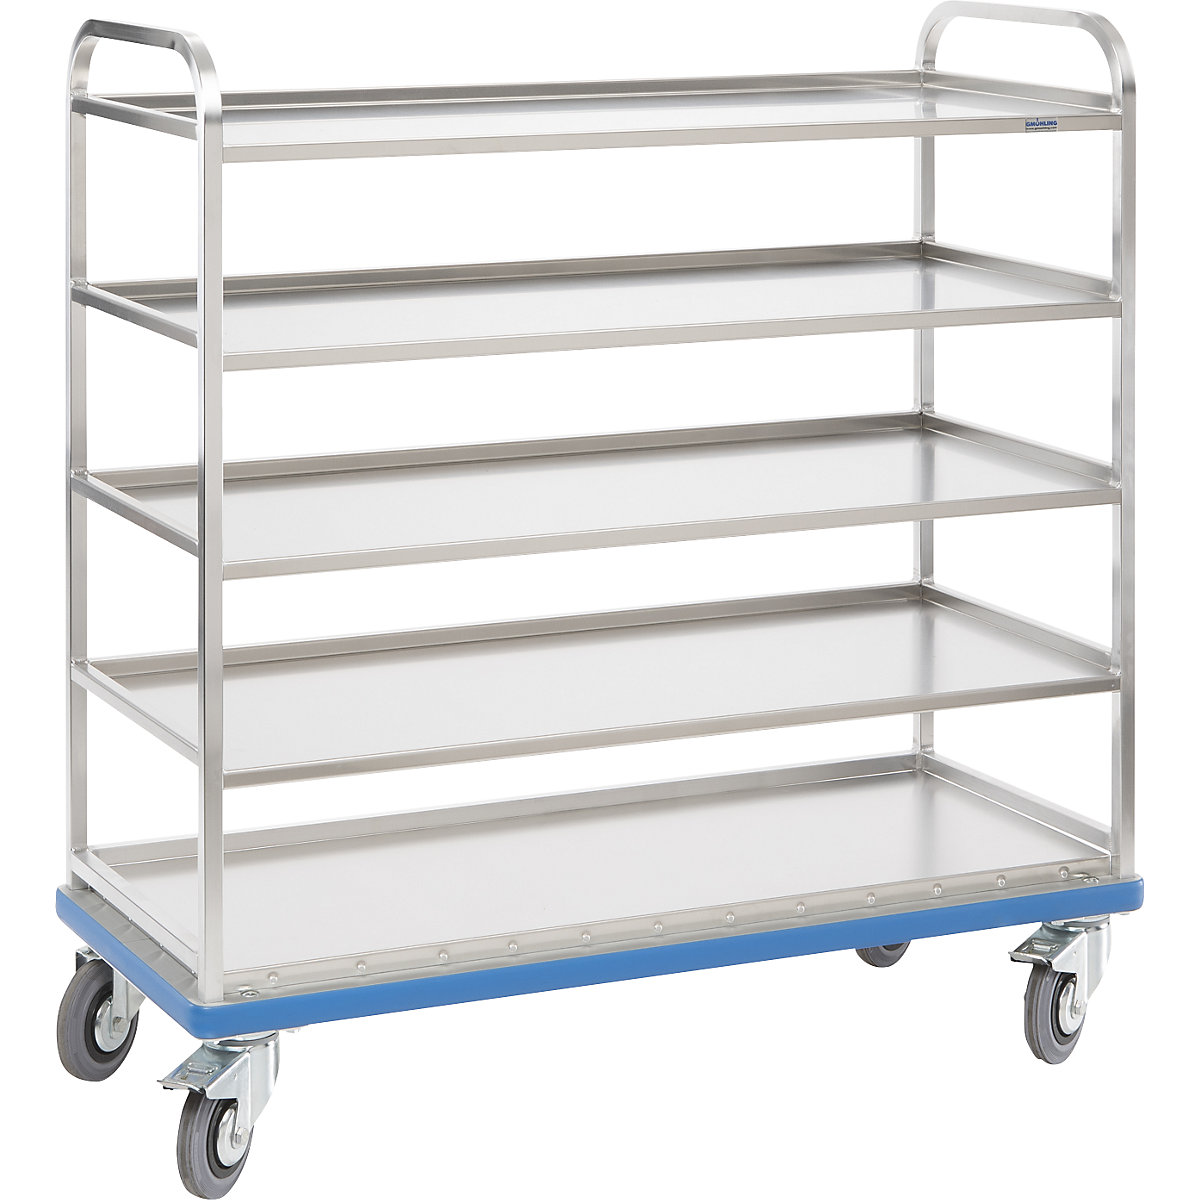 G®-ORG E 2801 shelf trolley – Gmöhling, 5 levels, 4 shelves, LxH 590 x 1420 mm-1